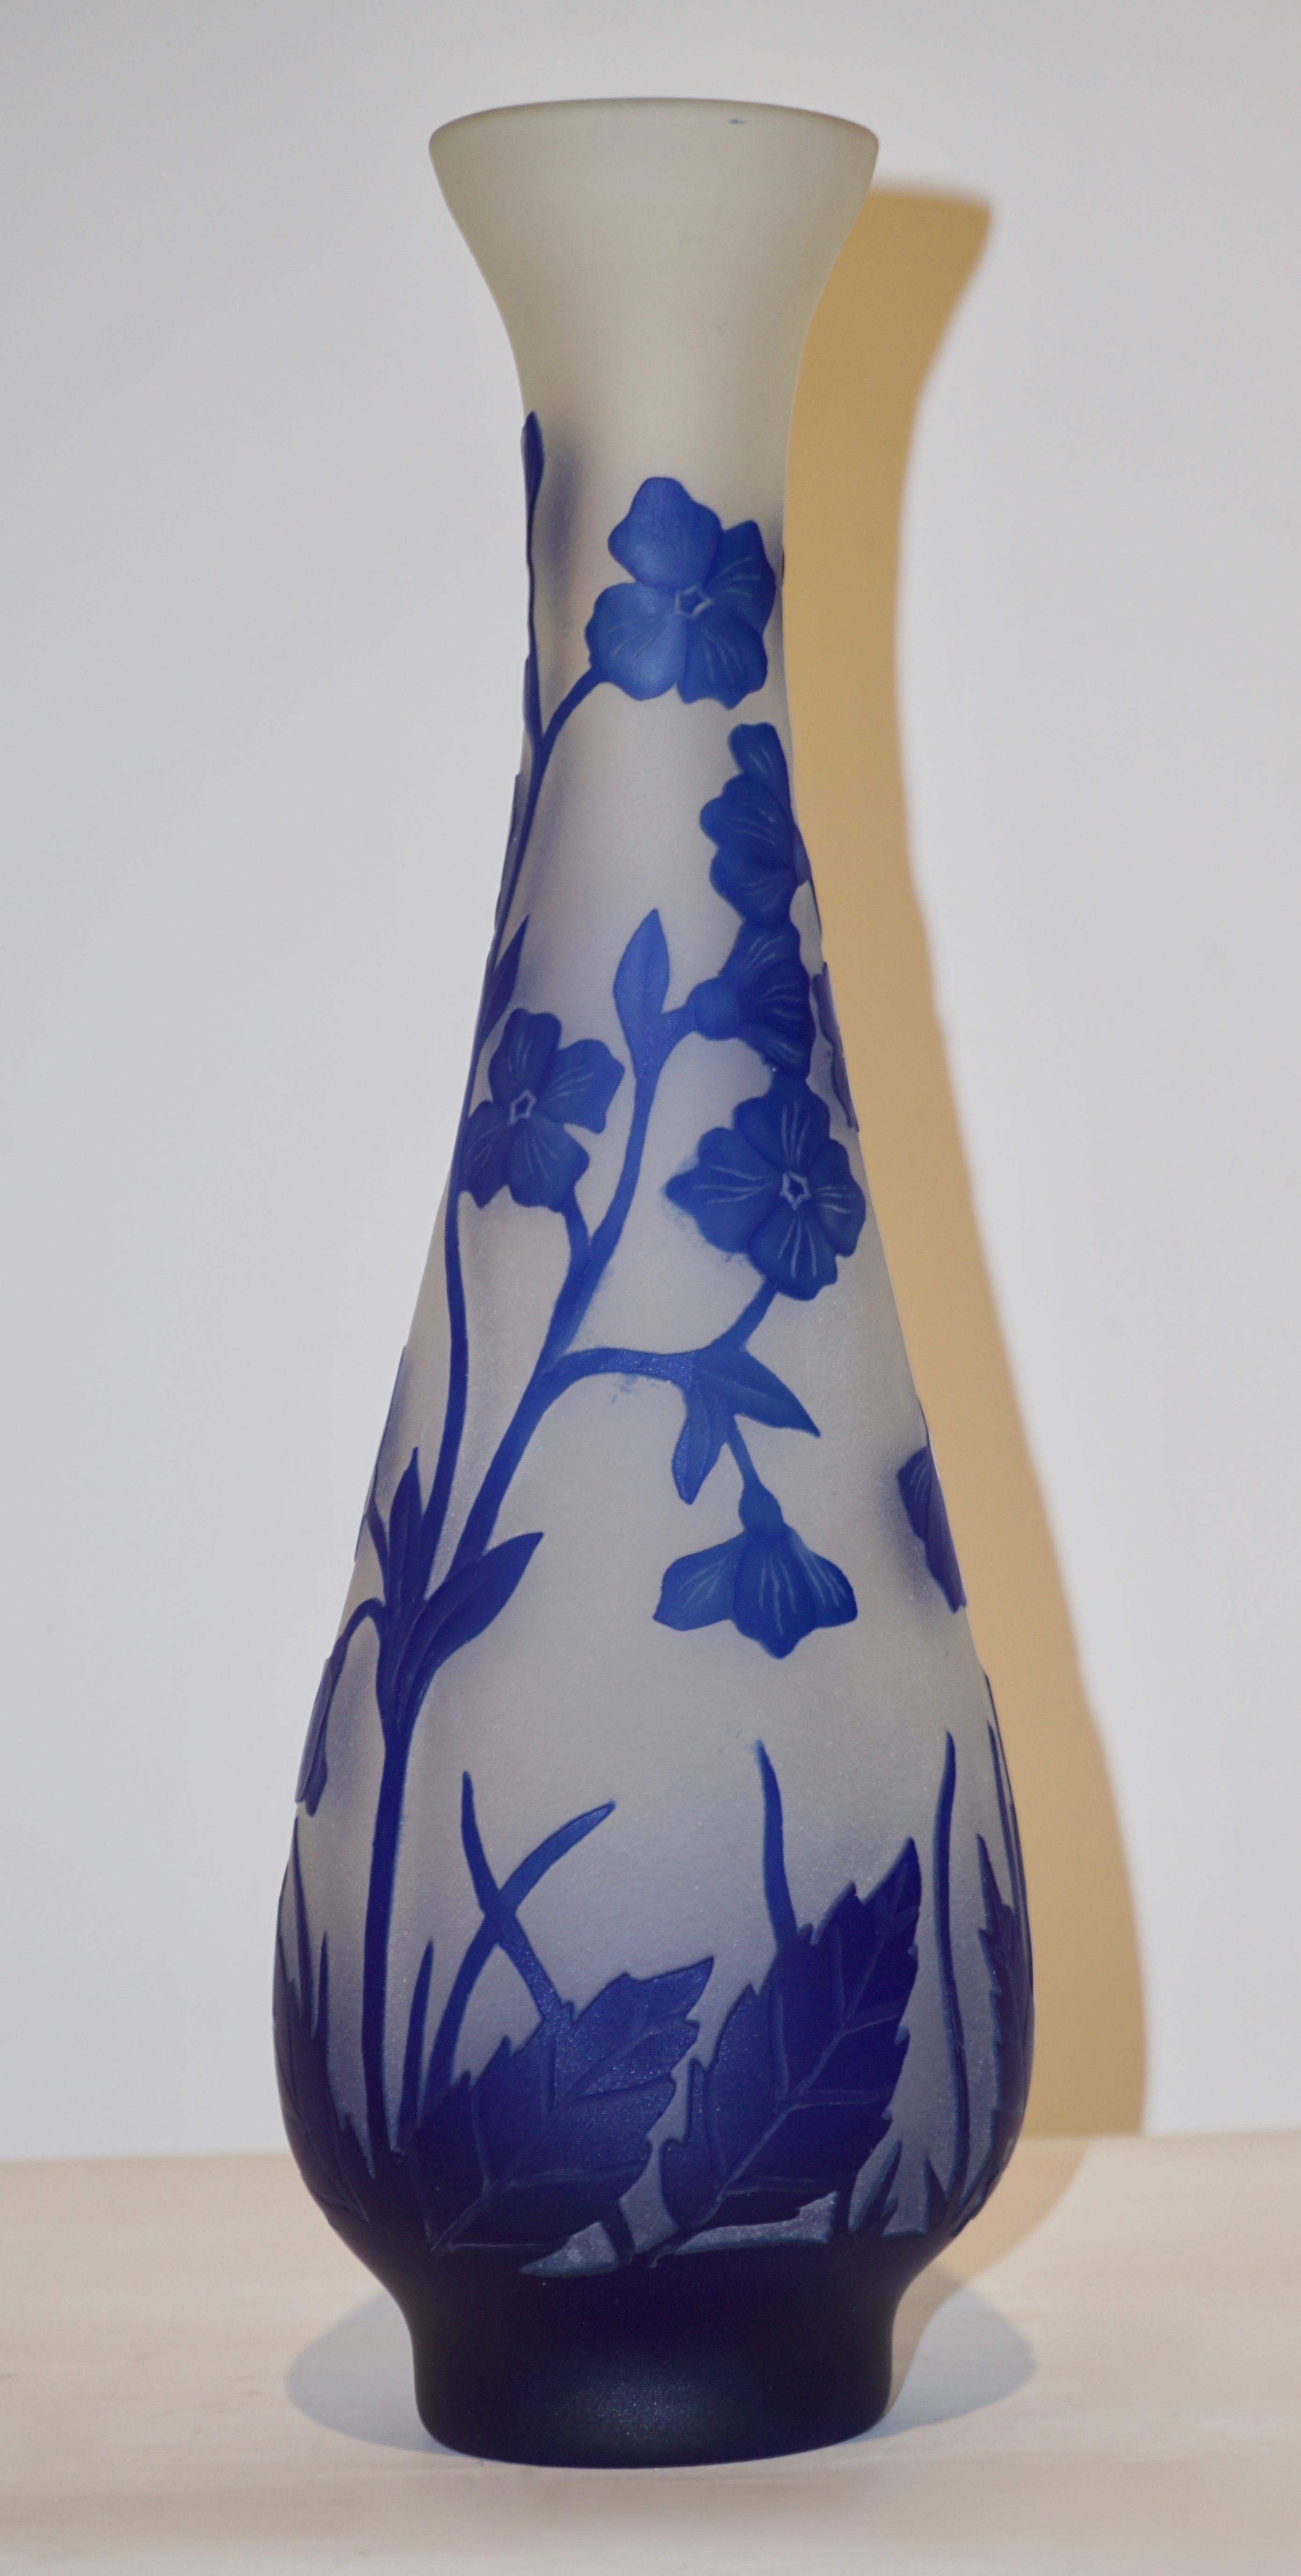 Mid-Century Modern 1970s Austrian Art Nouveau Style Crystal Glass Vase with Blue Flax Flowers